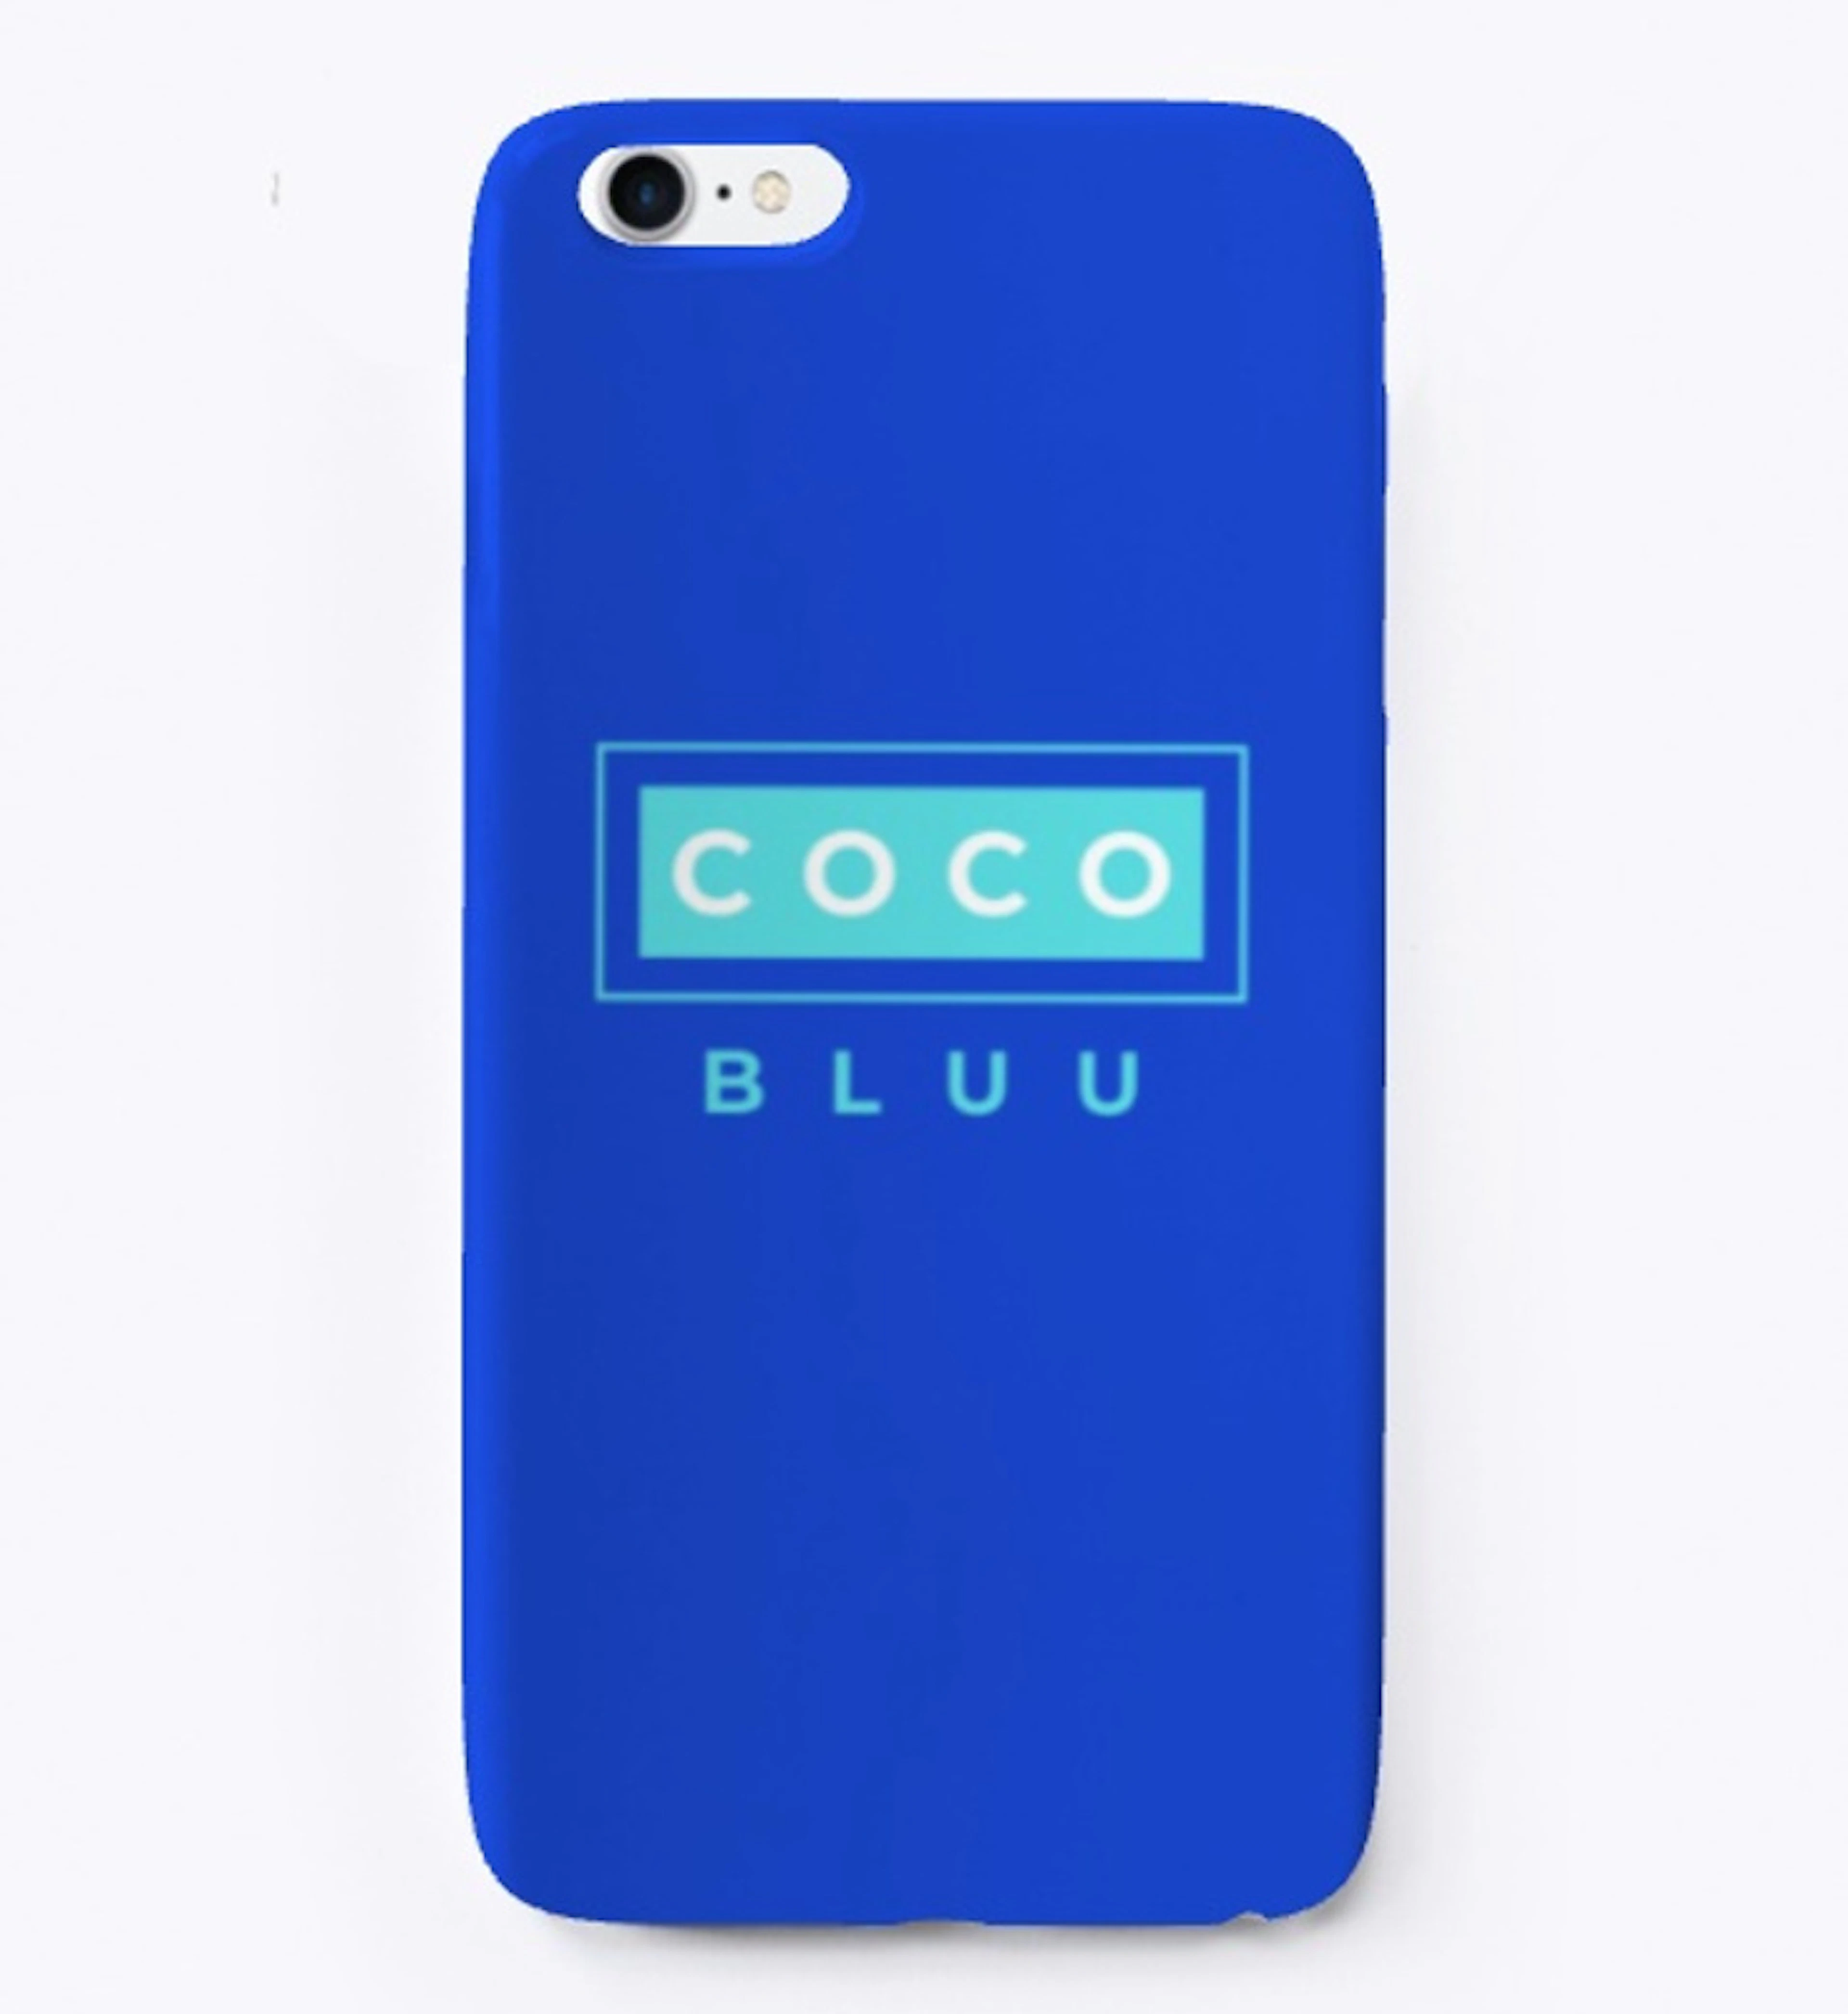 Coco-Bluu Simply Classic